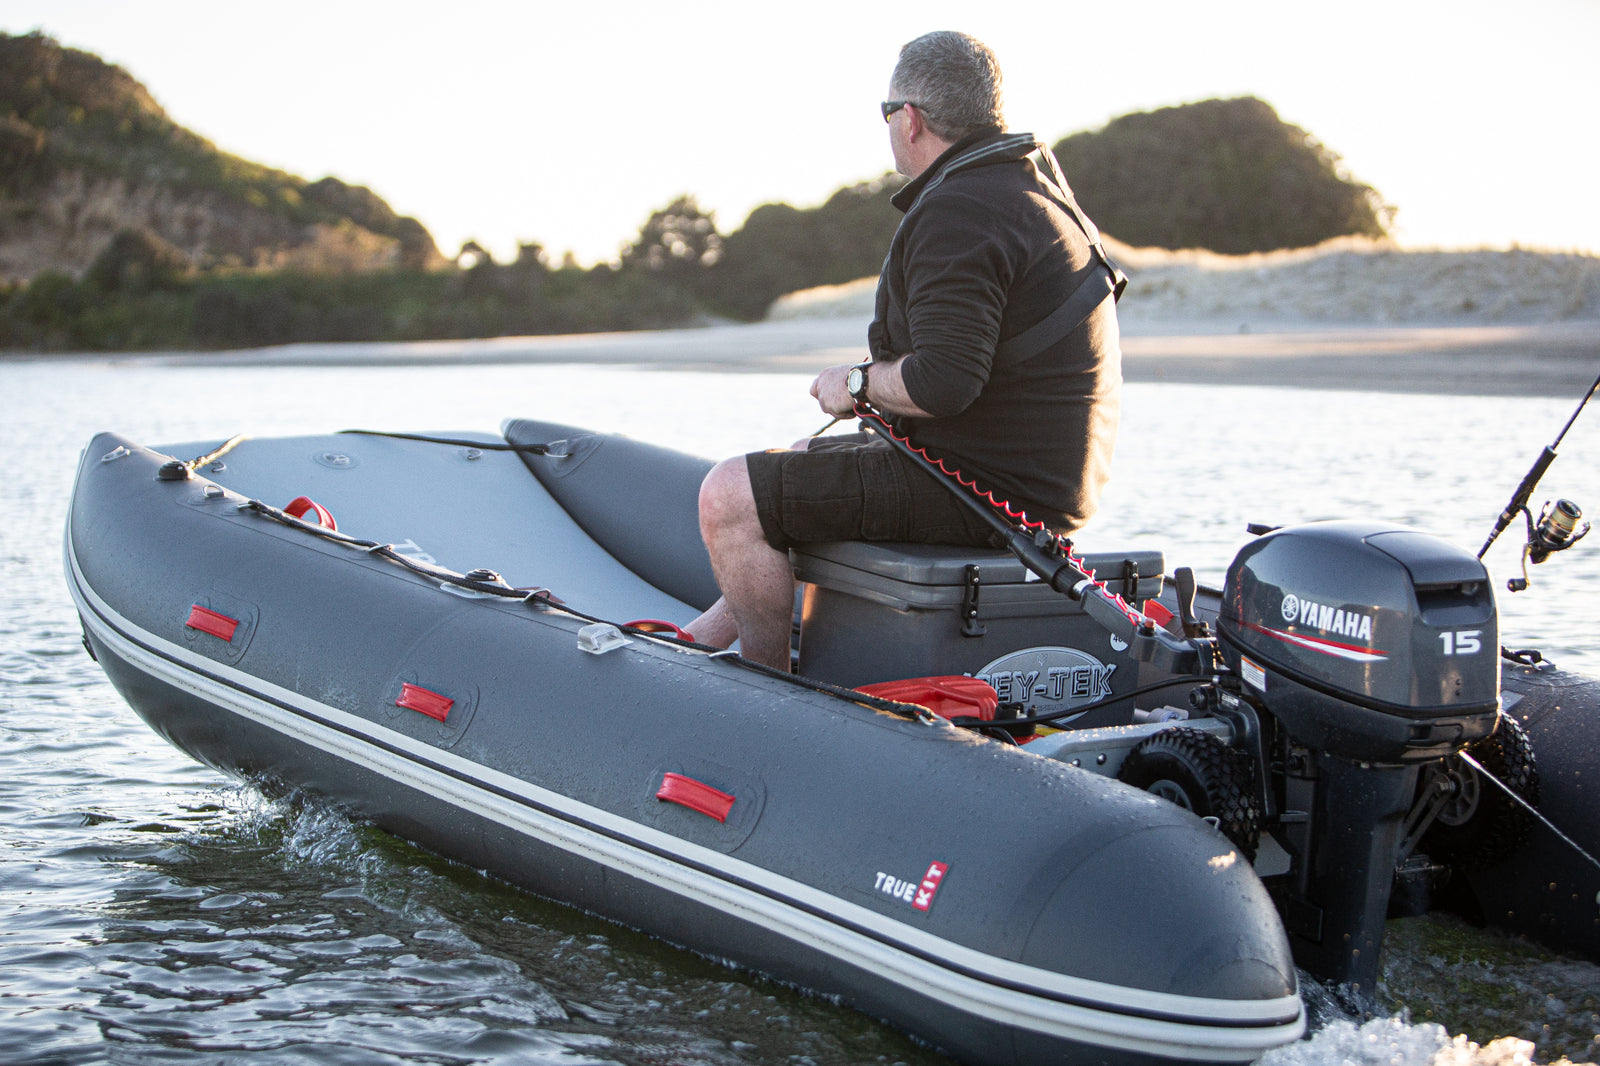 True Kit lightweight, stable, portable inflatable catamarans